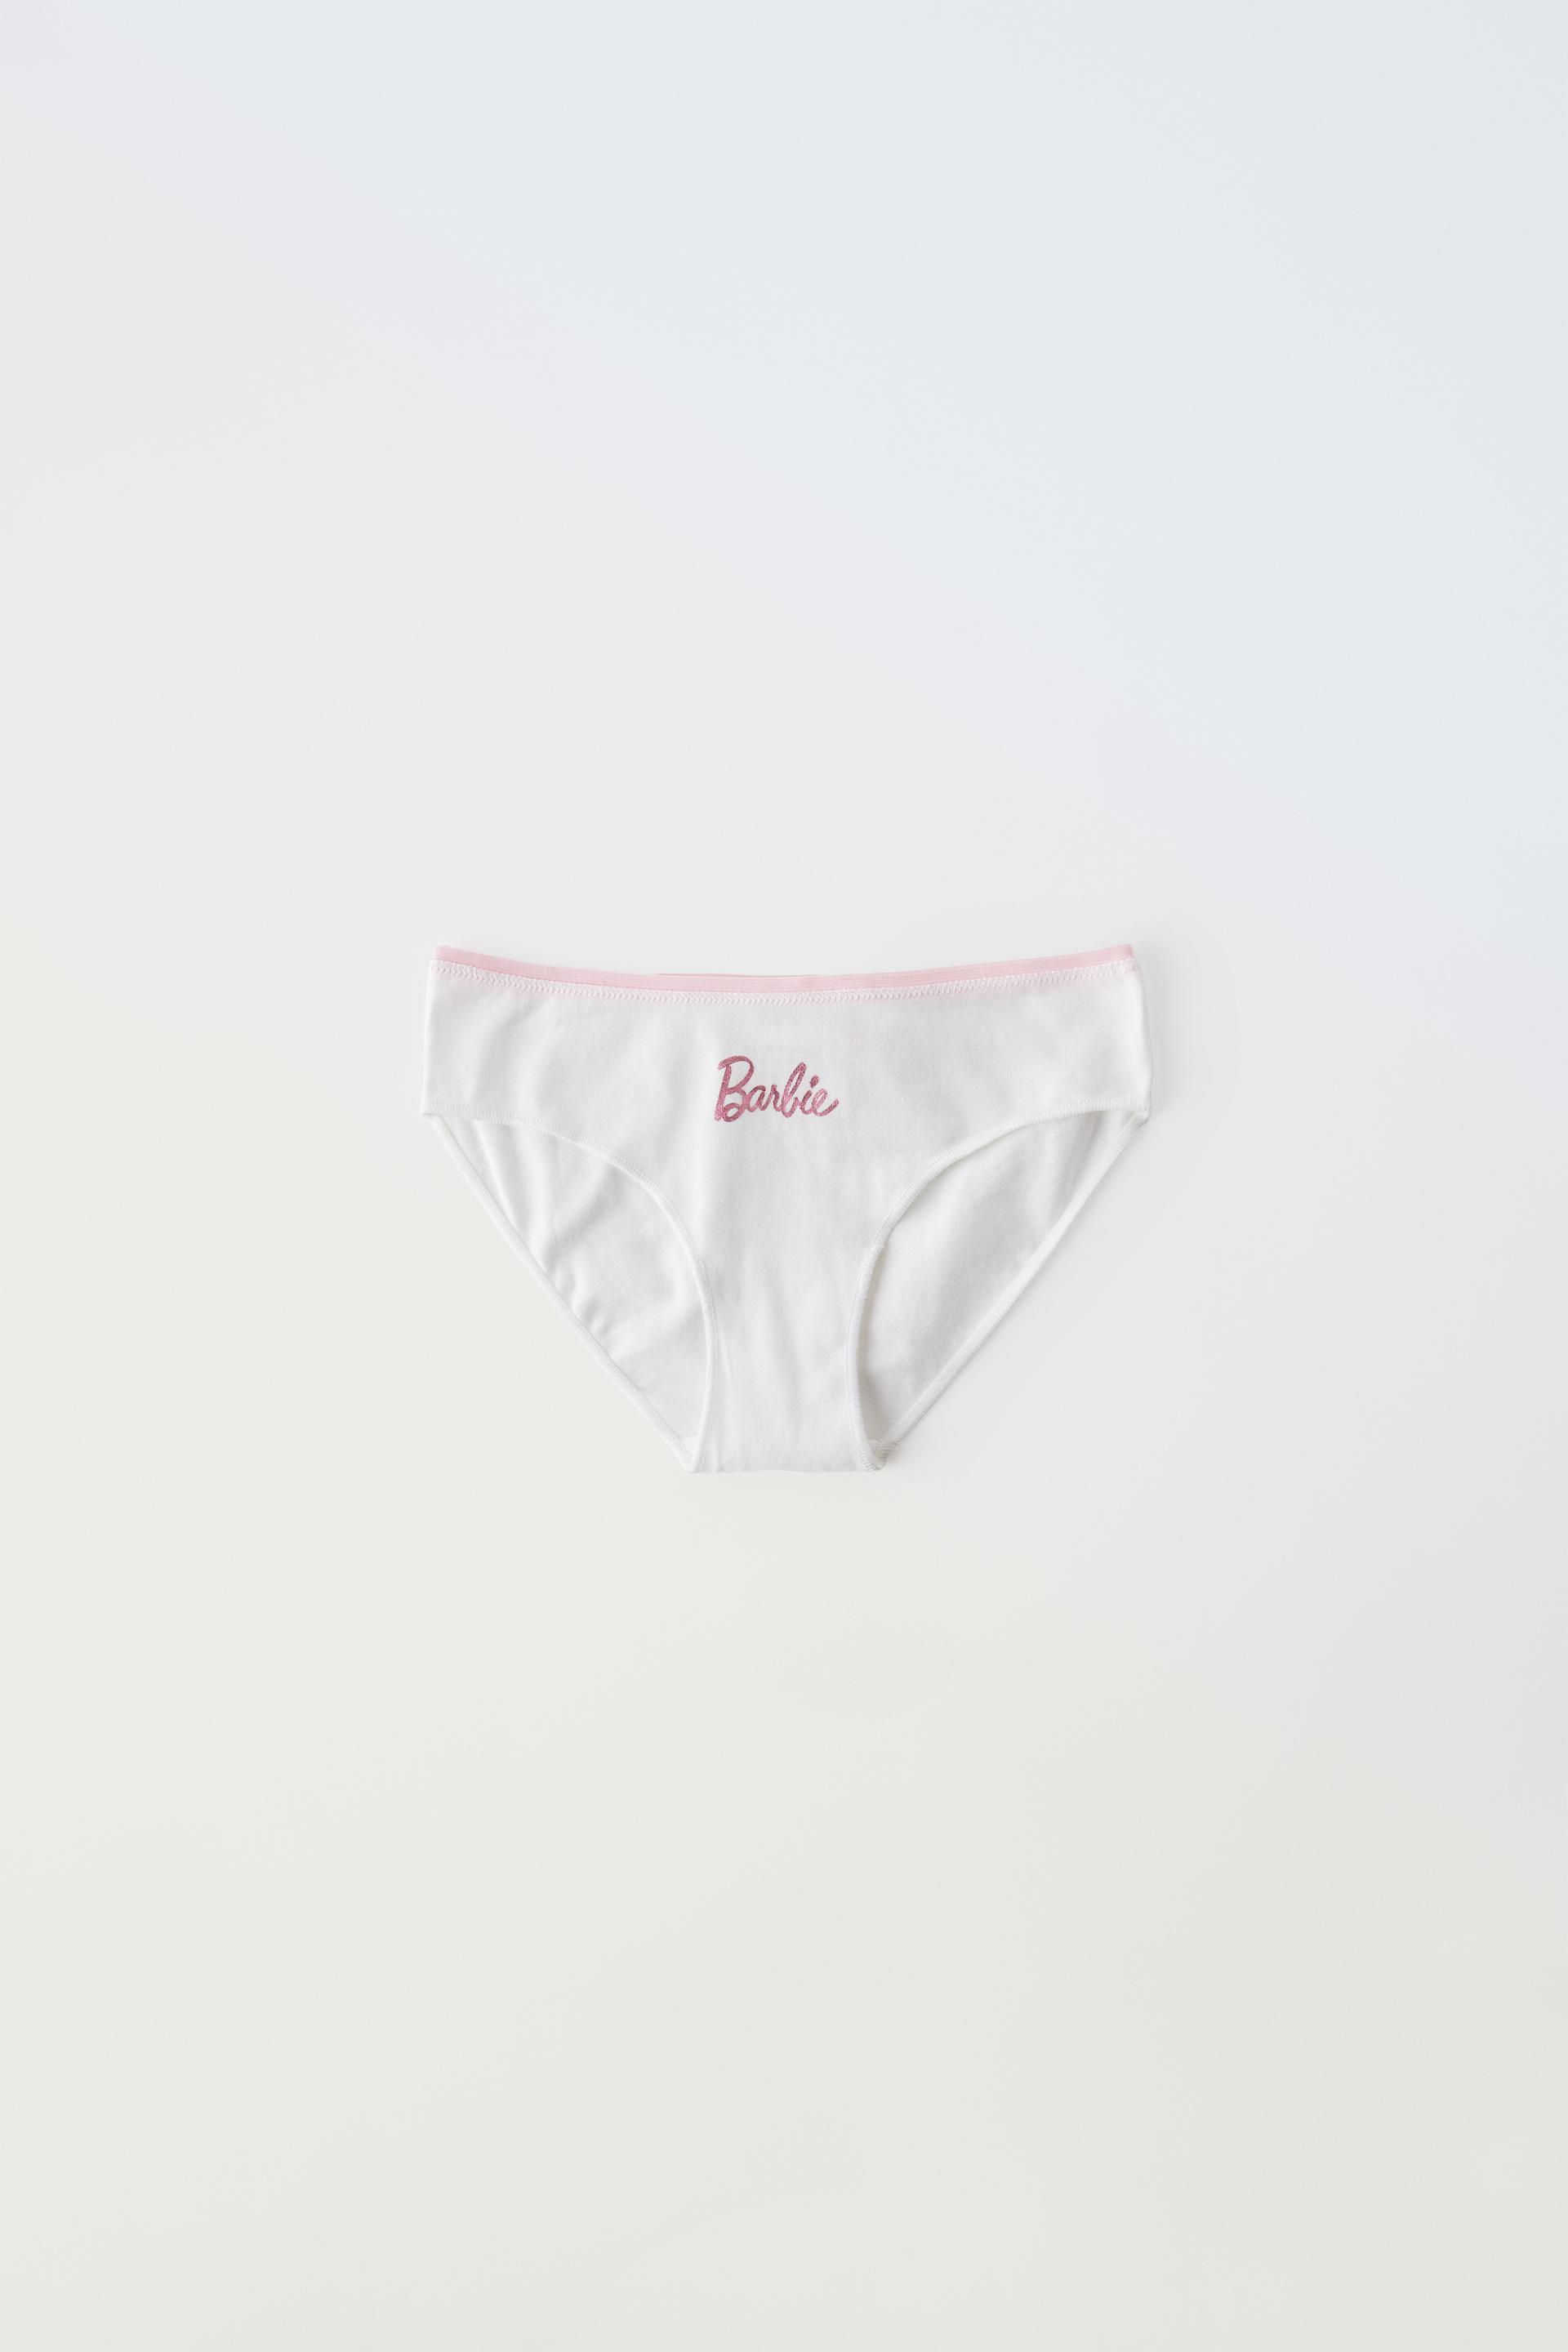 Vintage Barbie Doll Pink Panties Underwear White Lace Trim nylon